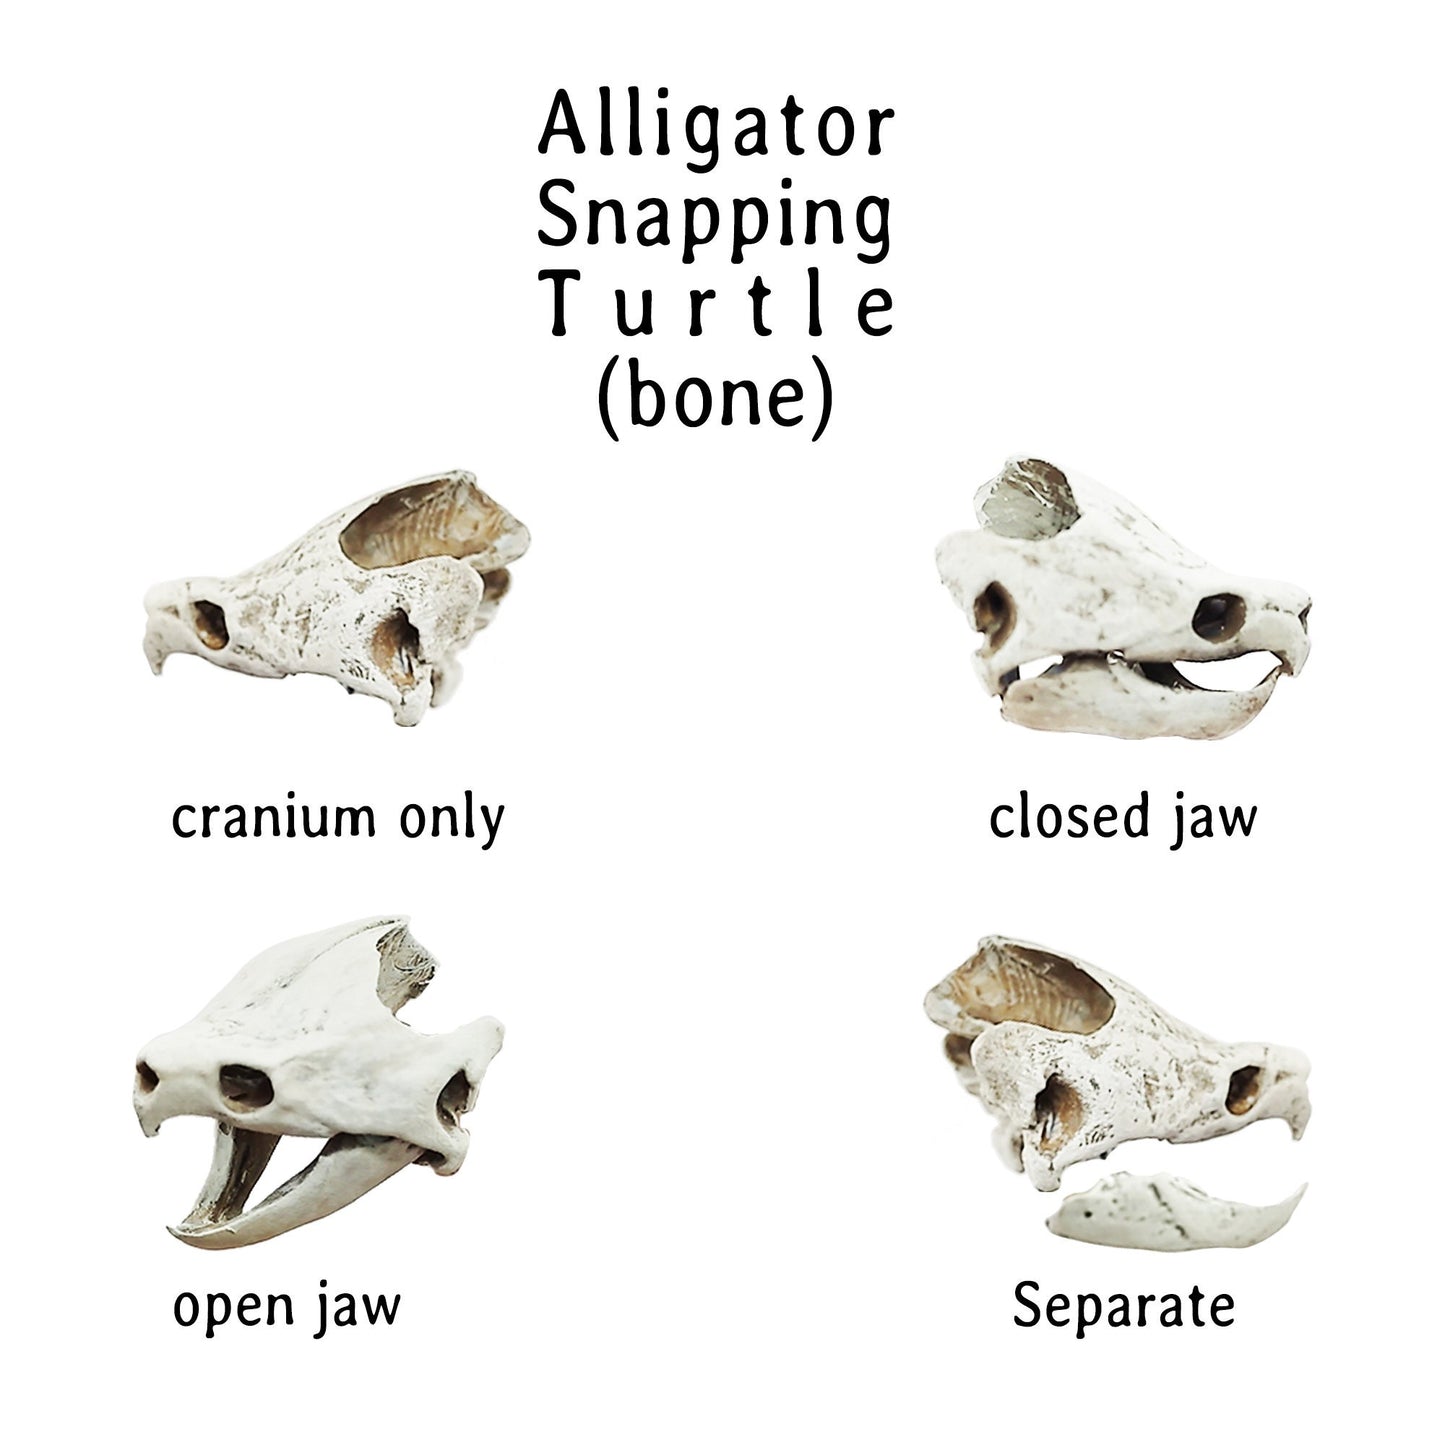 Alligator Snapping Turtle Skull - 1:24 Scale skull replica for diorama, dollhouse, curio cabinet, miniature animal skulls (Set of 5)